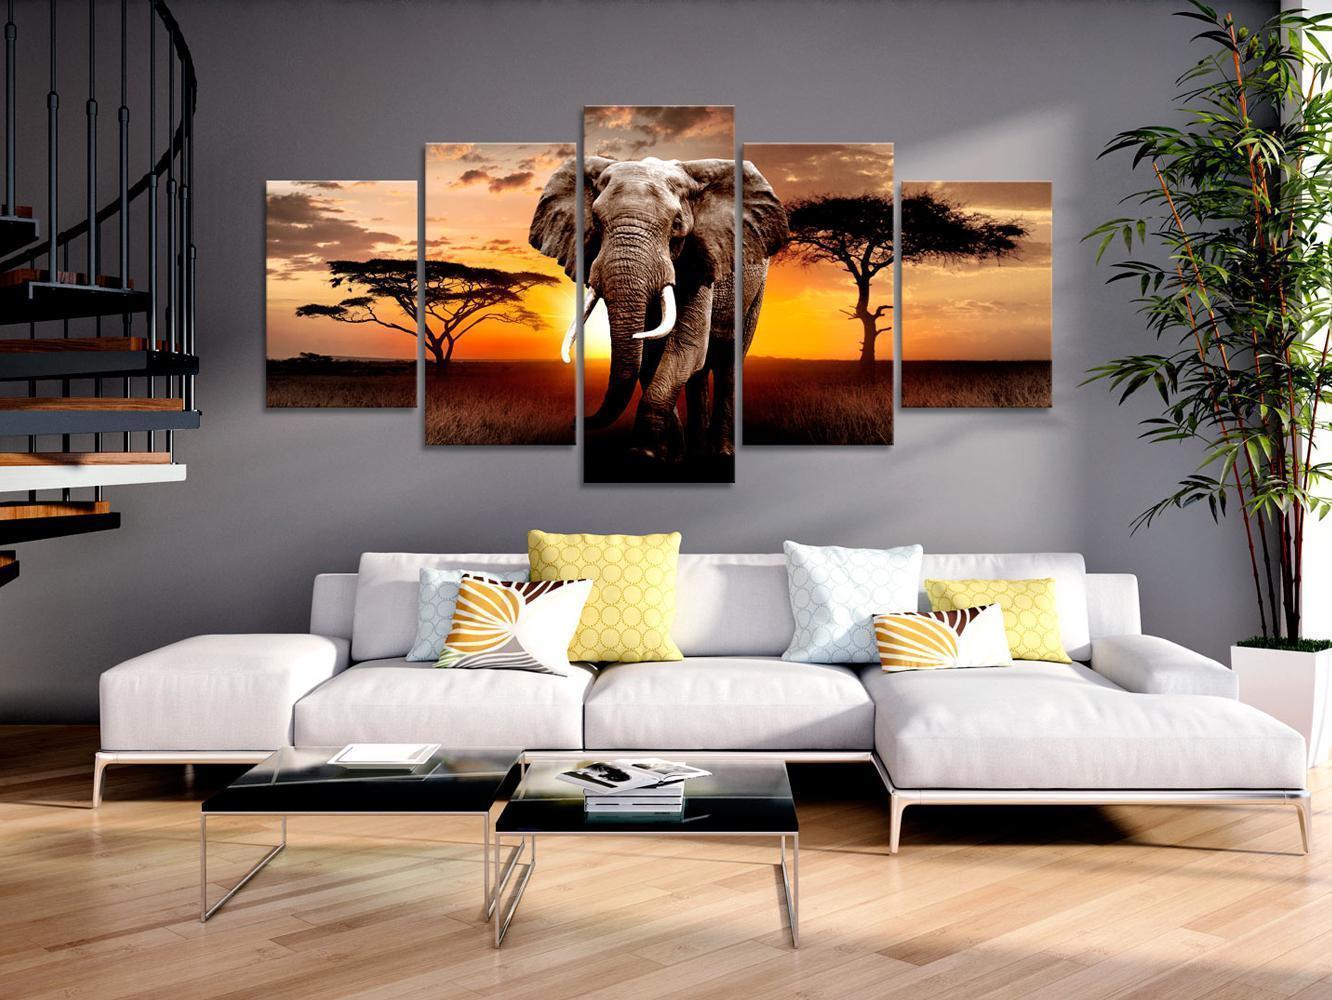 Gemälde - Elefantenwanderung